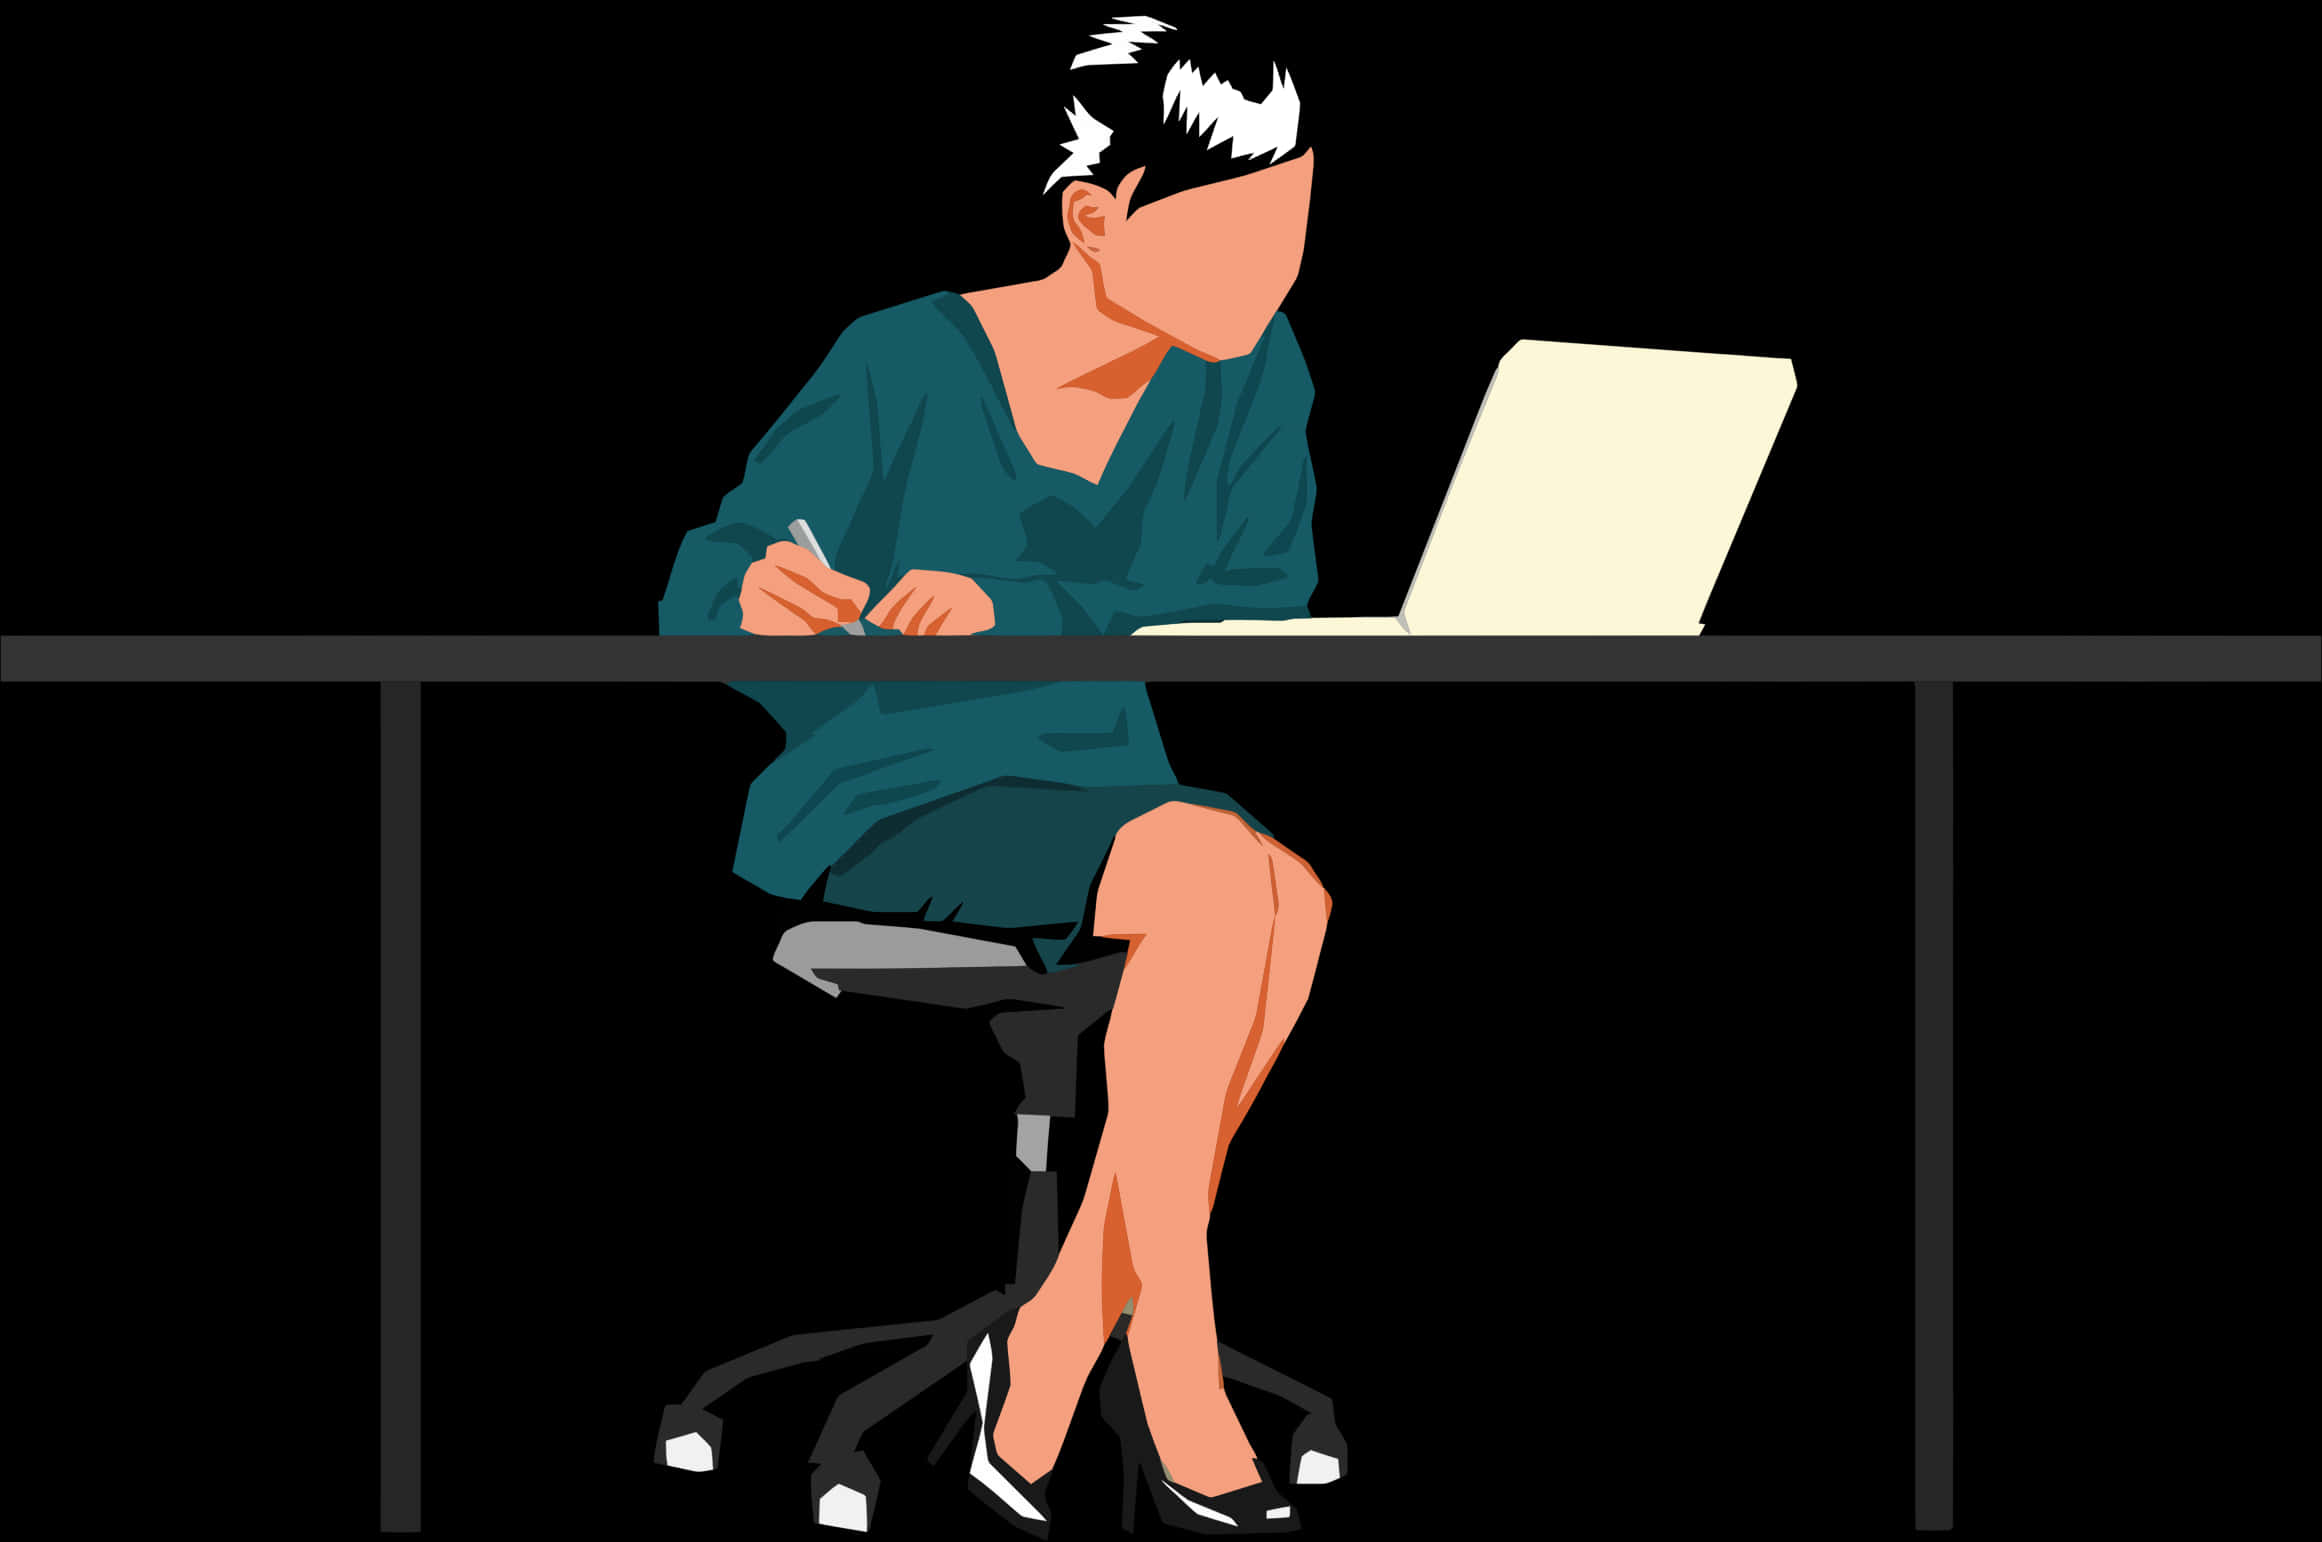 Focused Professional Workingat Desk